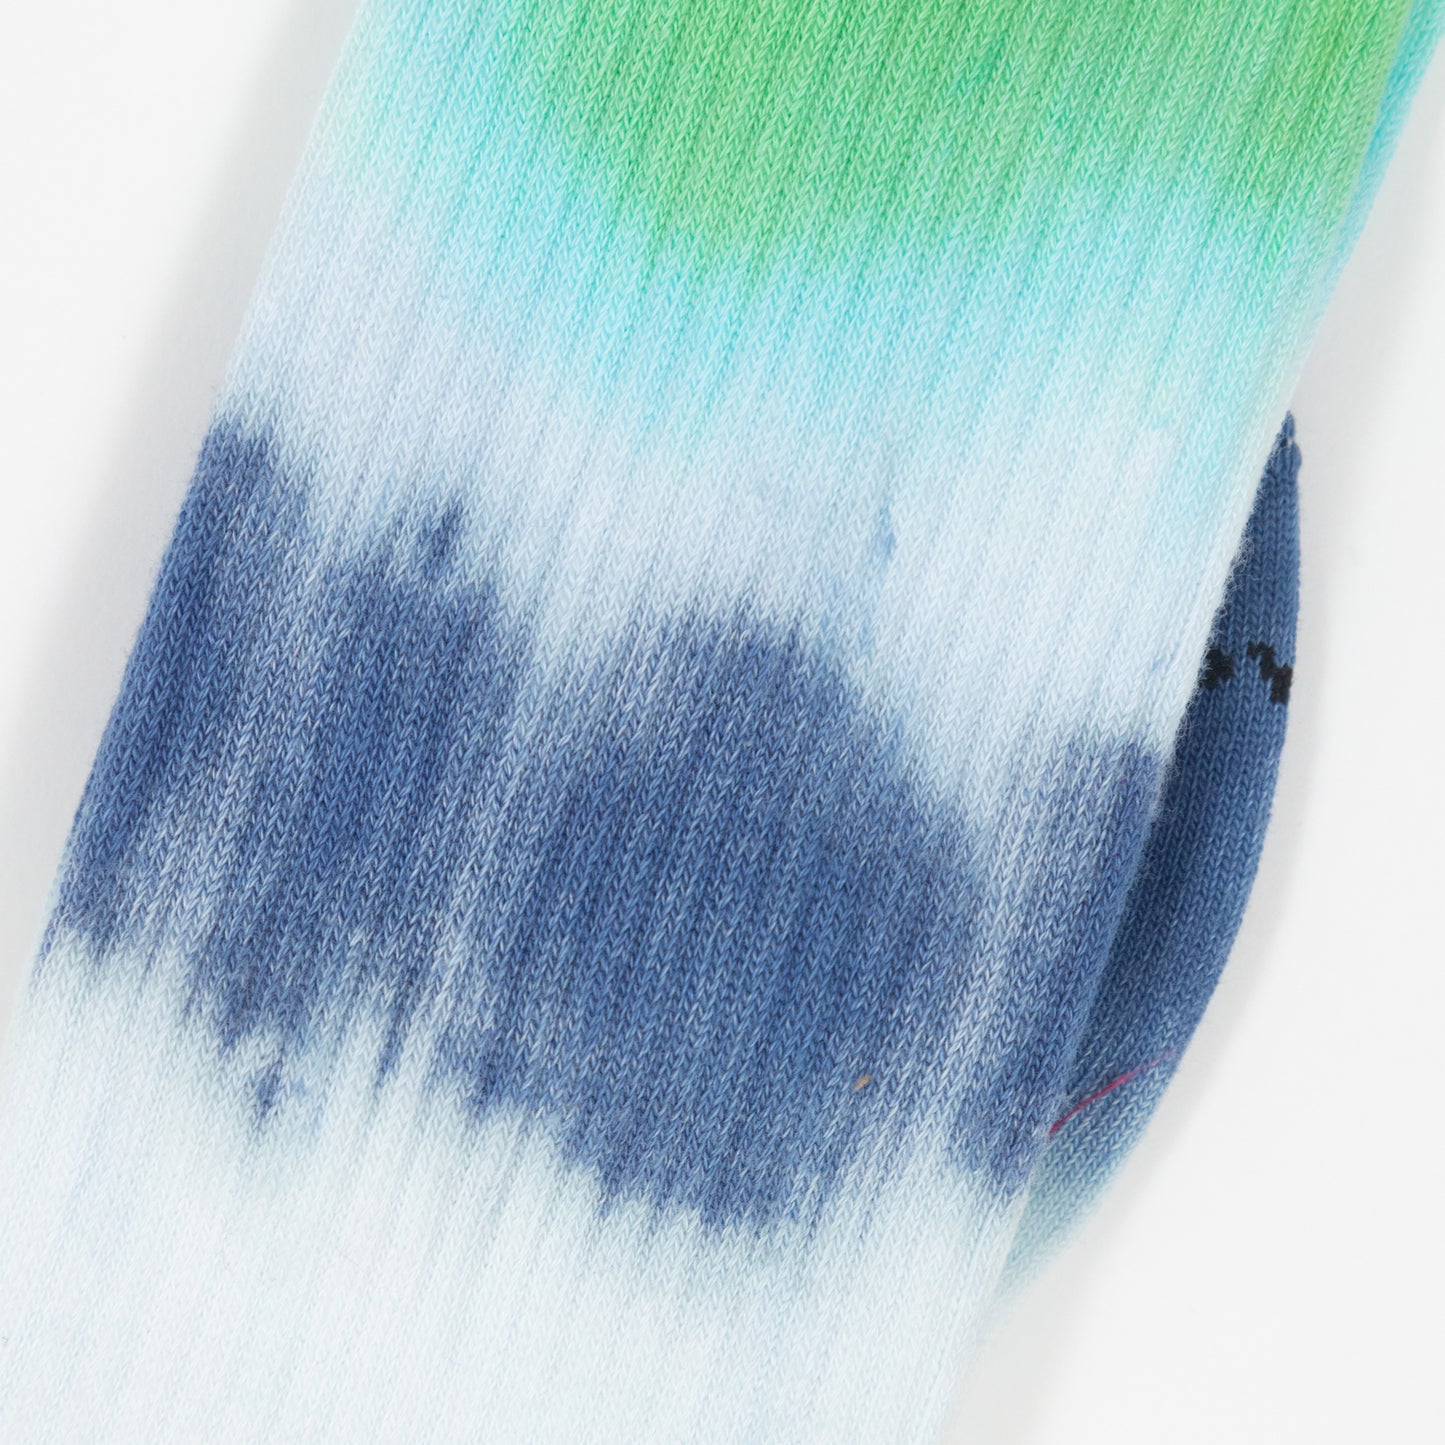 HAPPY SOCKS Dip Dye Sneaker Socks in WHITE, GREEN & BLUE